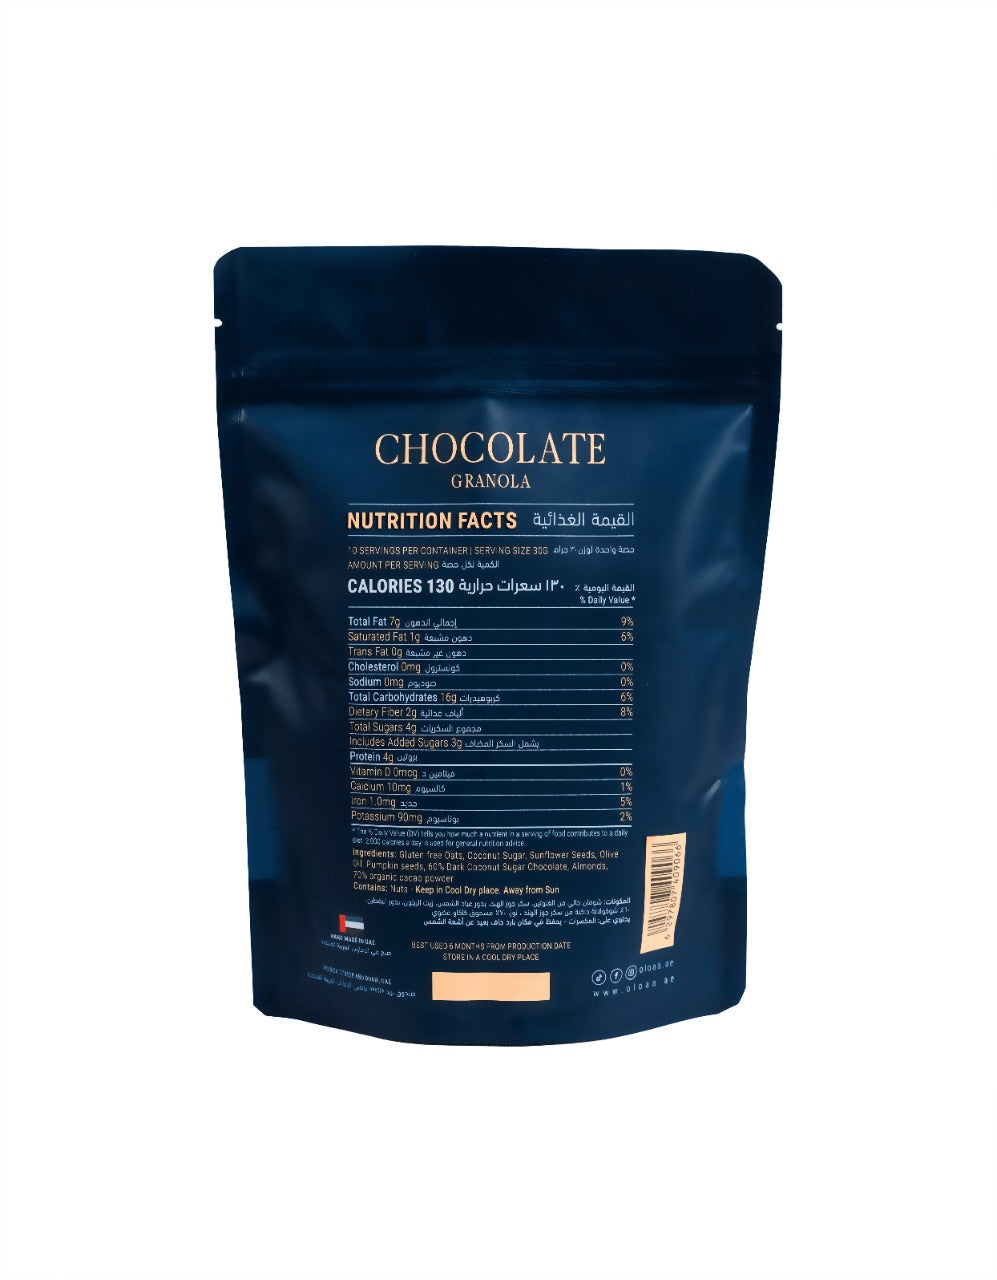 OLOAA Granola Bag - Chocolate, 300g